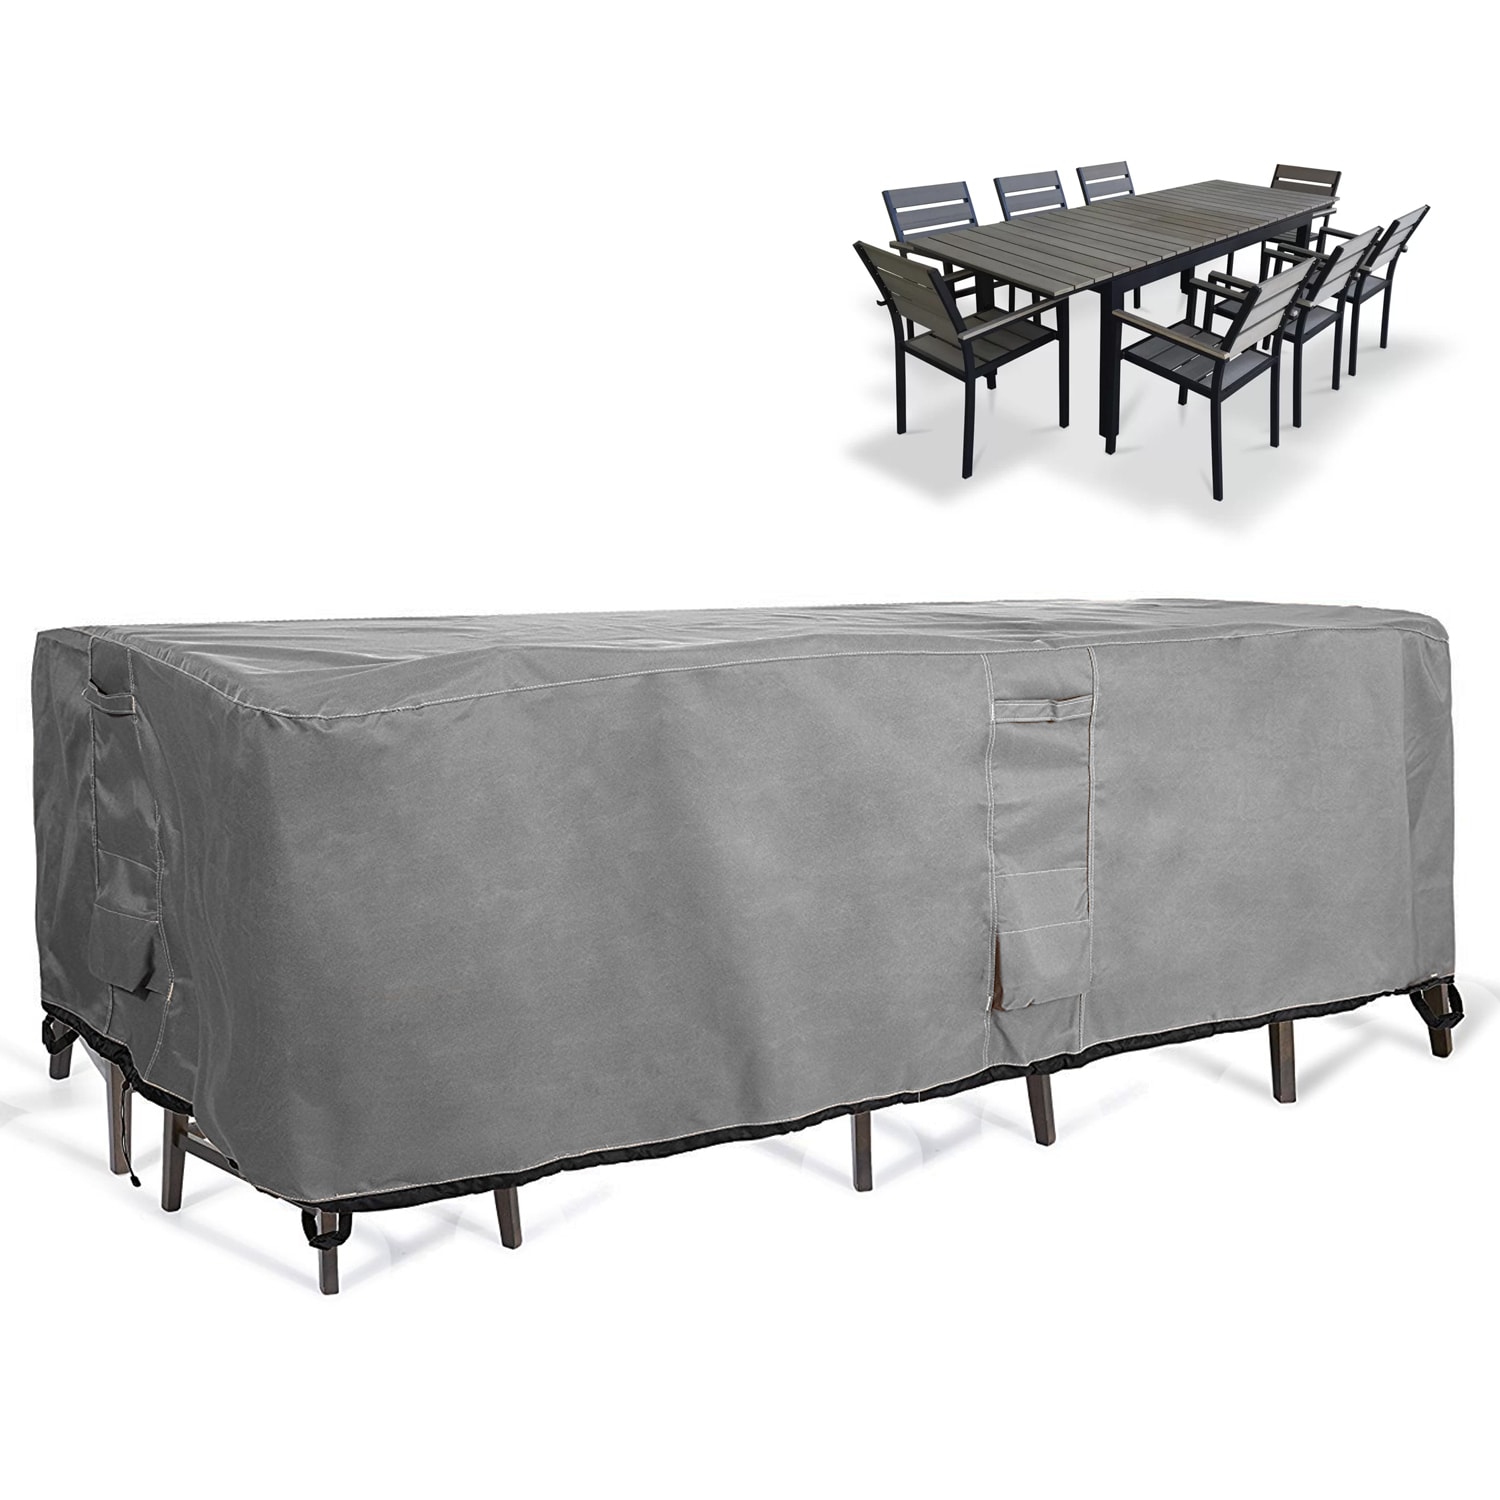 Waterproof Garden Patio Furniture Cover Rectangular Outdoor Rattan Table Cover 